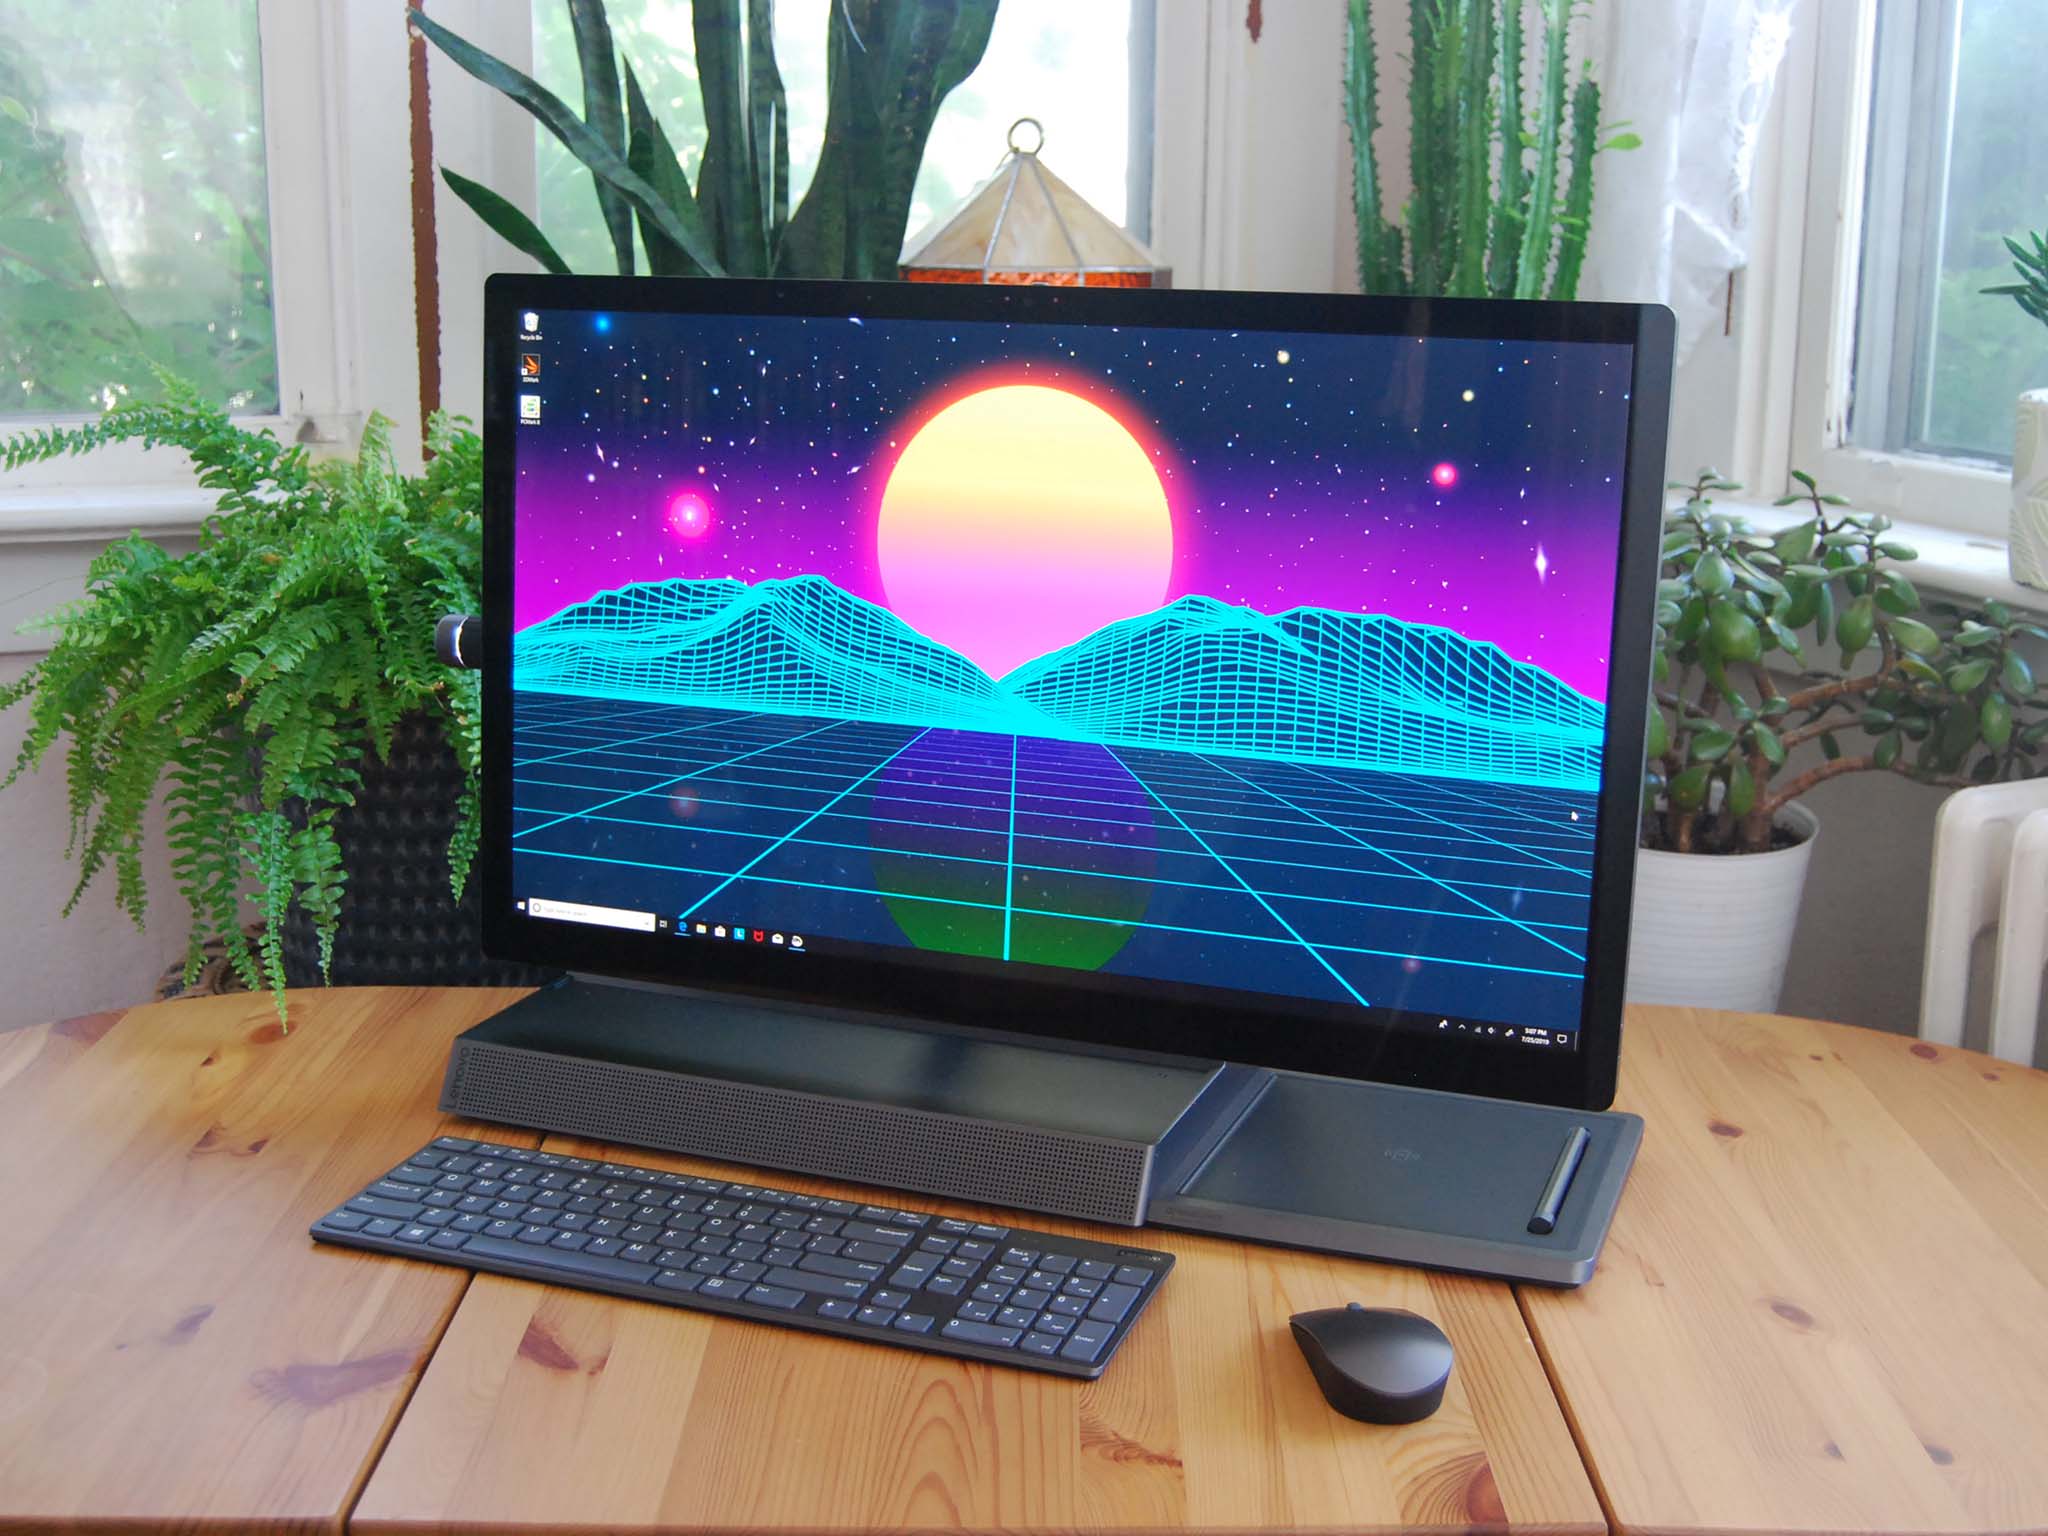 Lenovo Yoga A940 review: A strong alternative to the Surface Studio 2